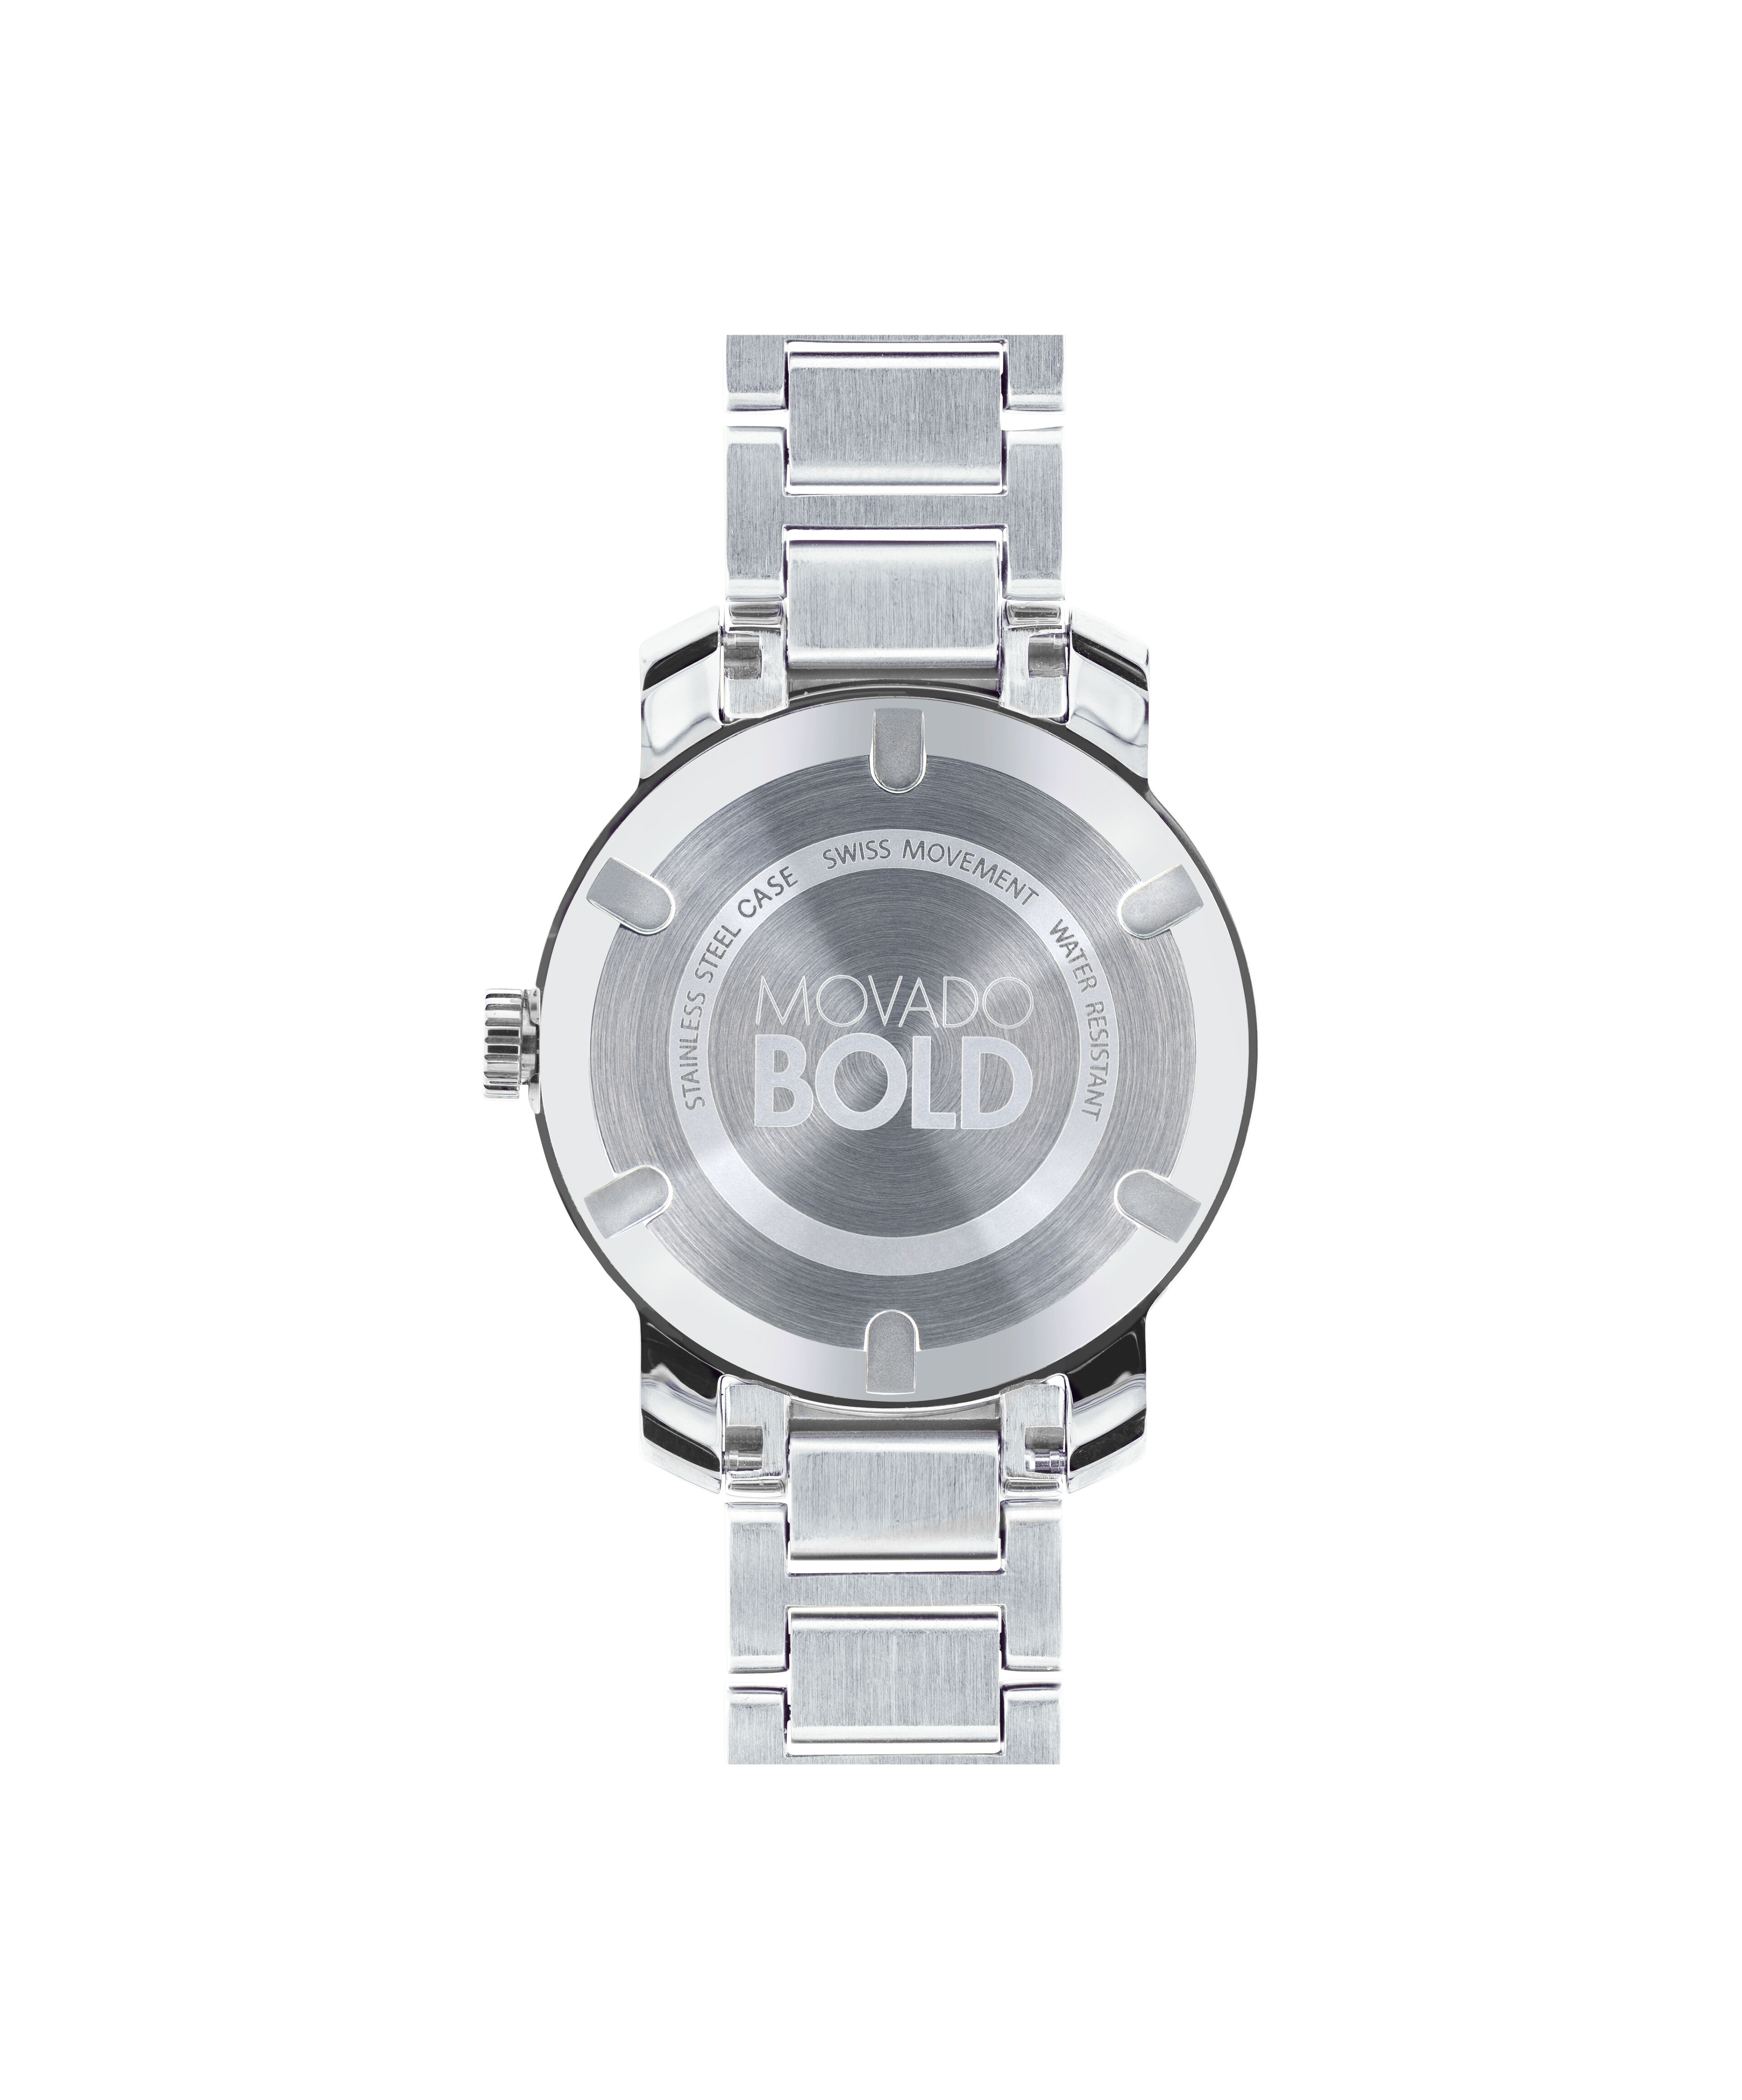 Designer Rolex Watches Replica